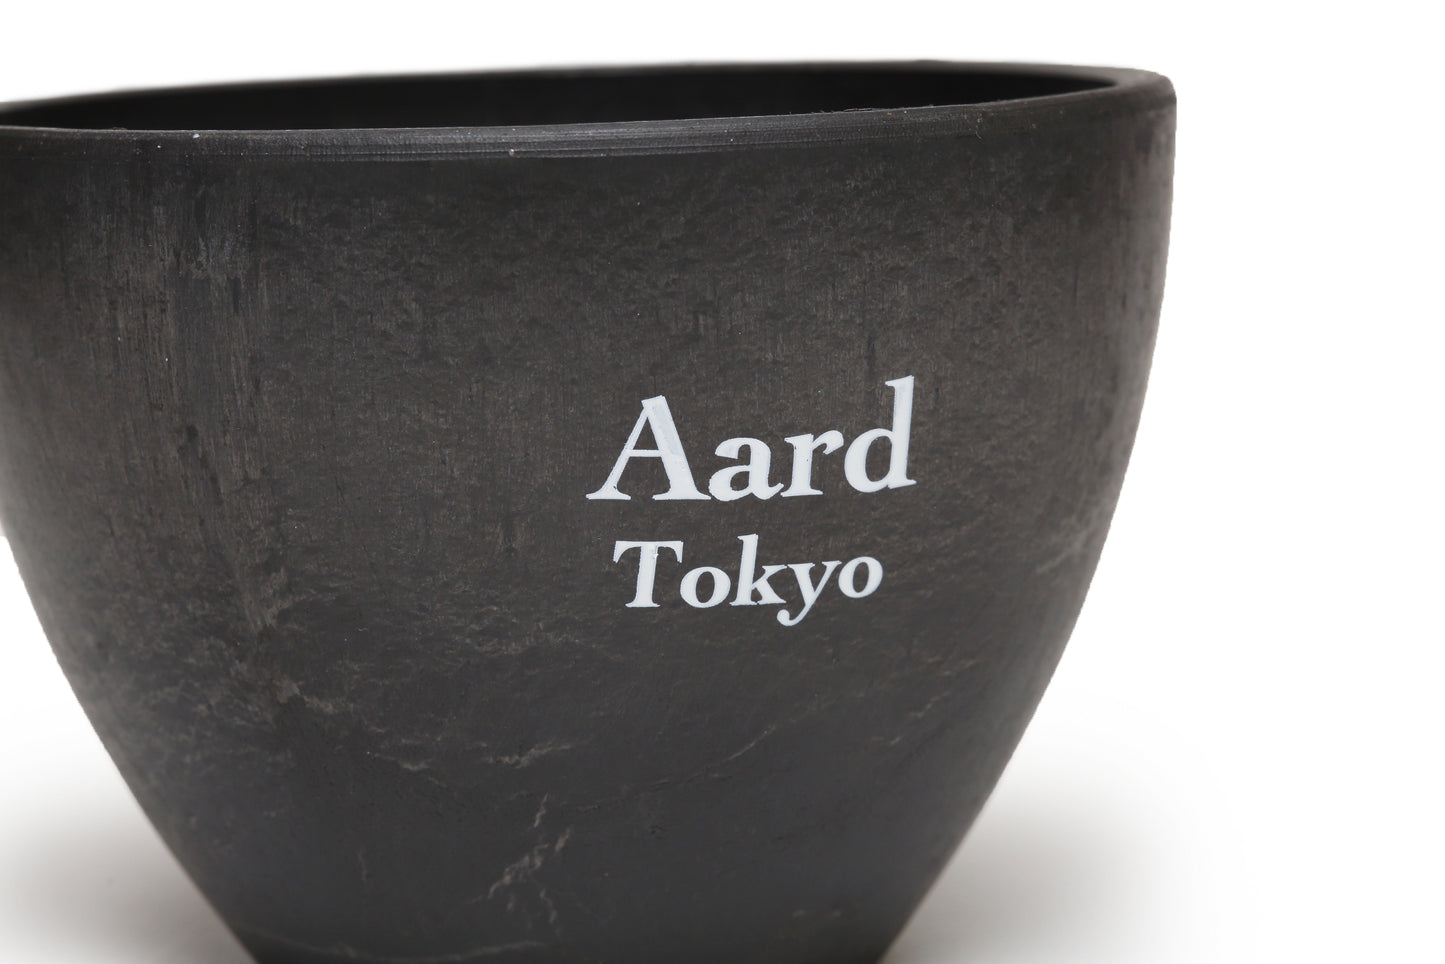 Aard Tokyo Plant Pot 02